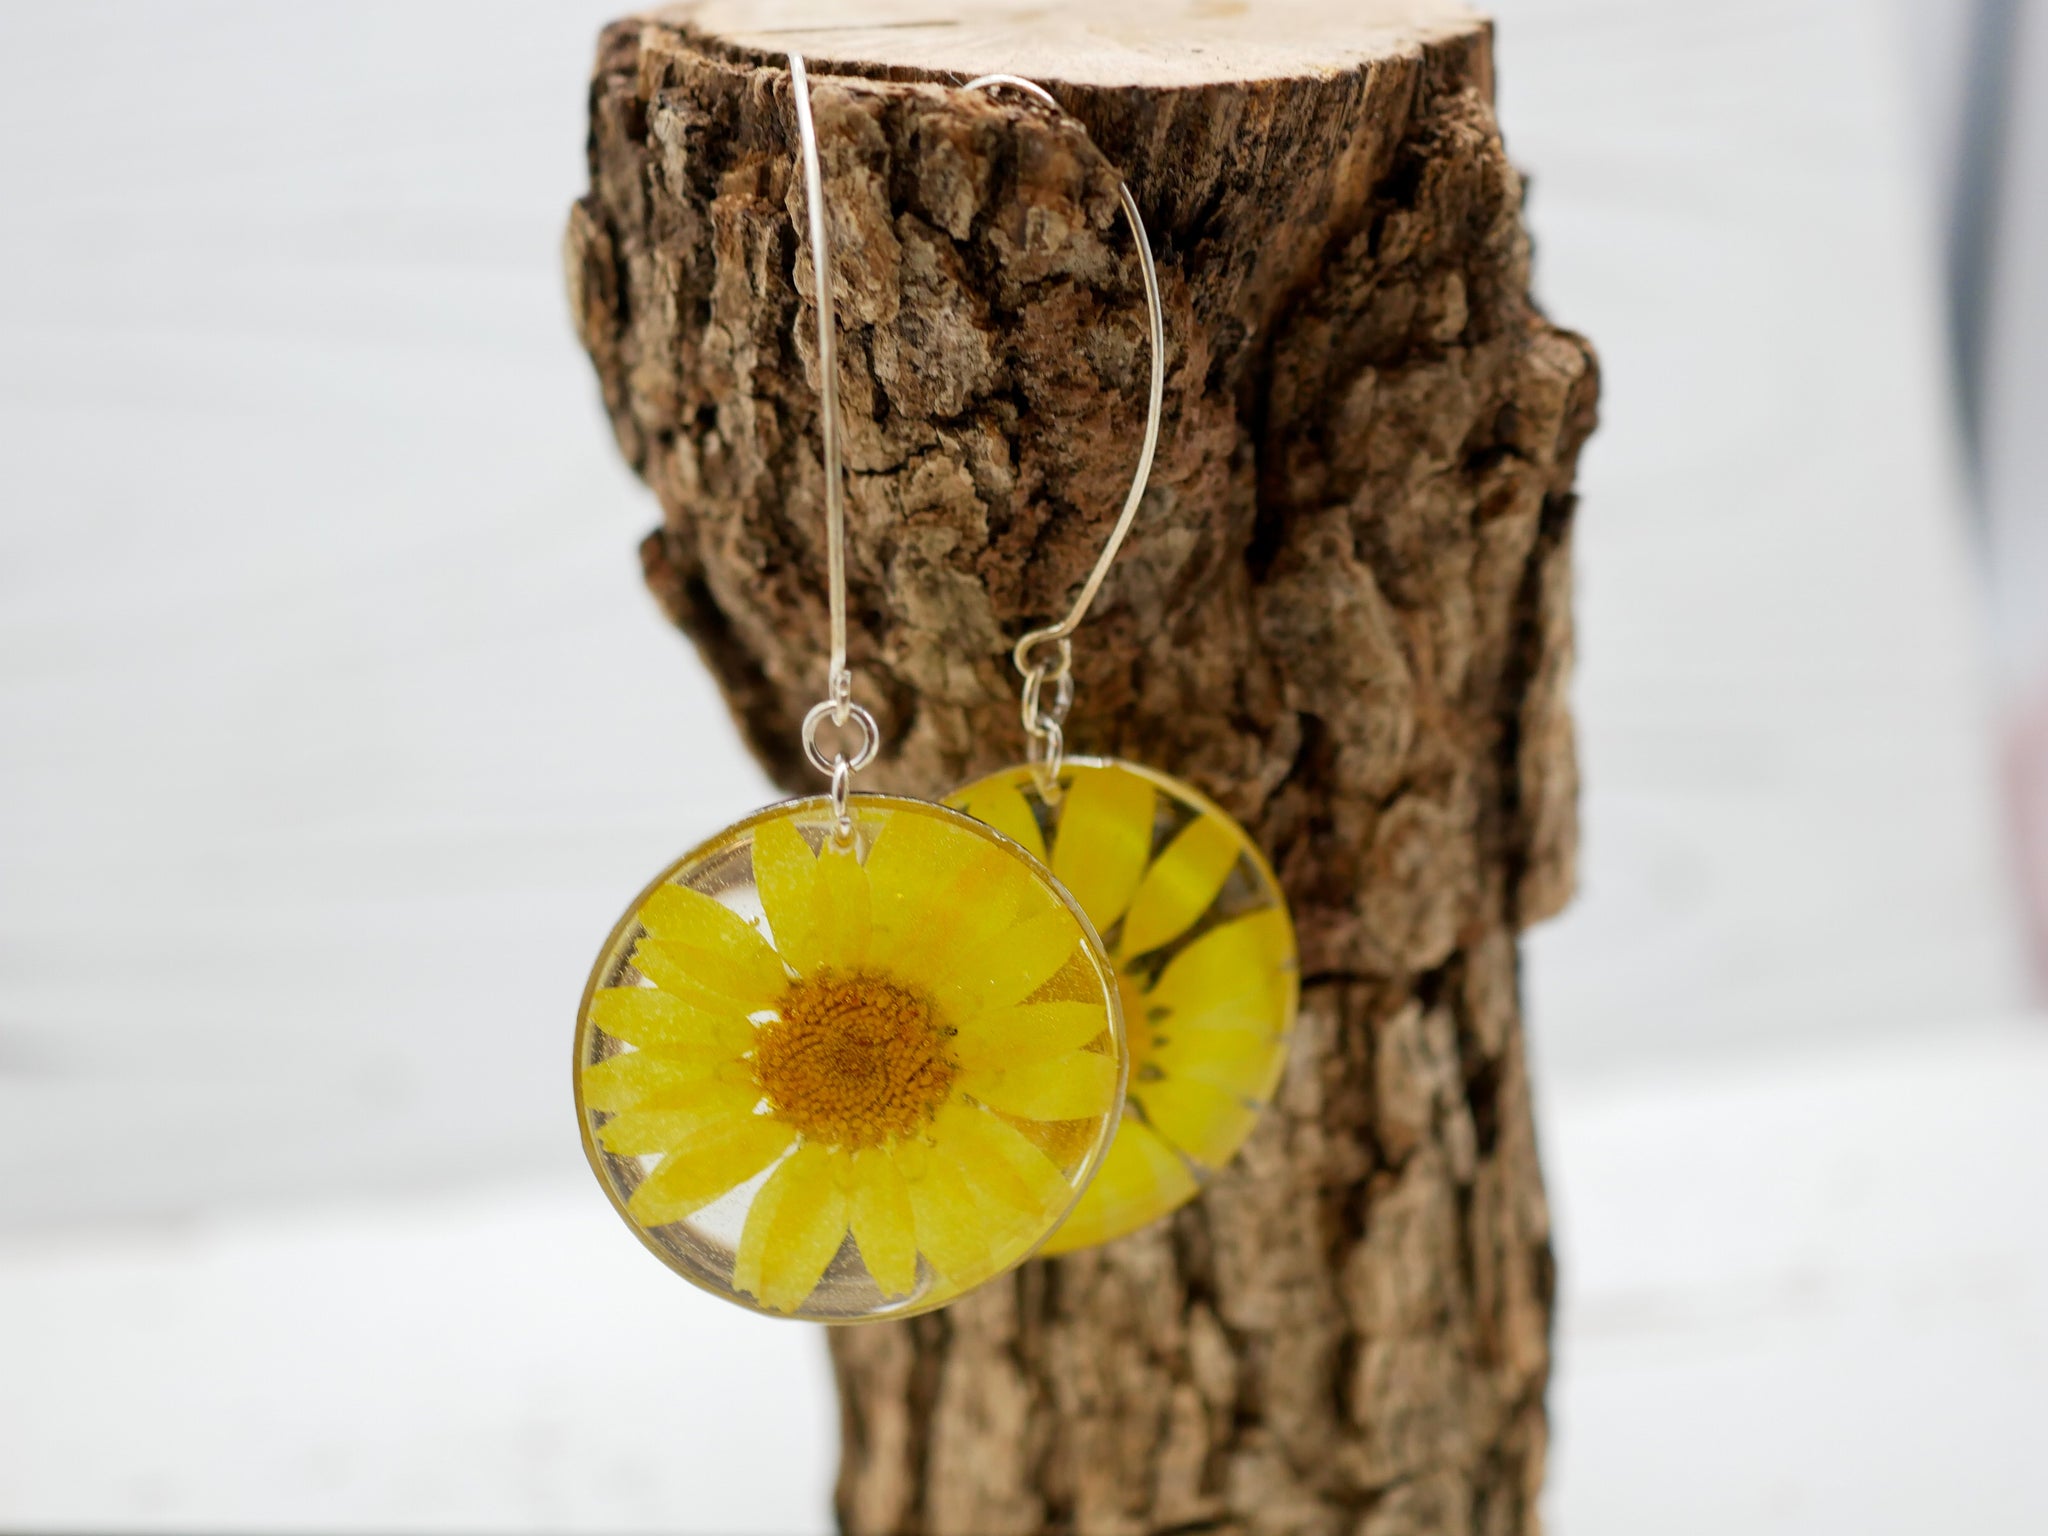 Yellow daisy long dangle earrings